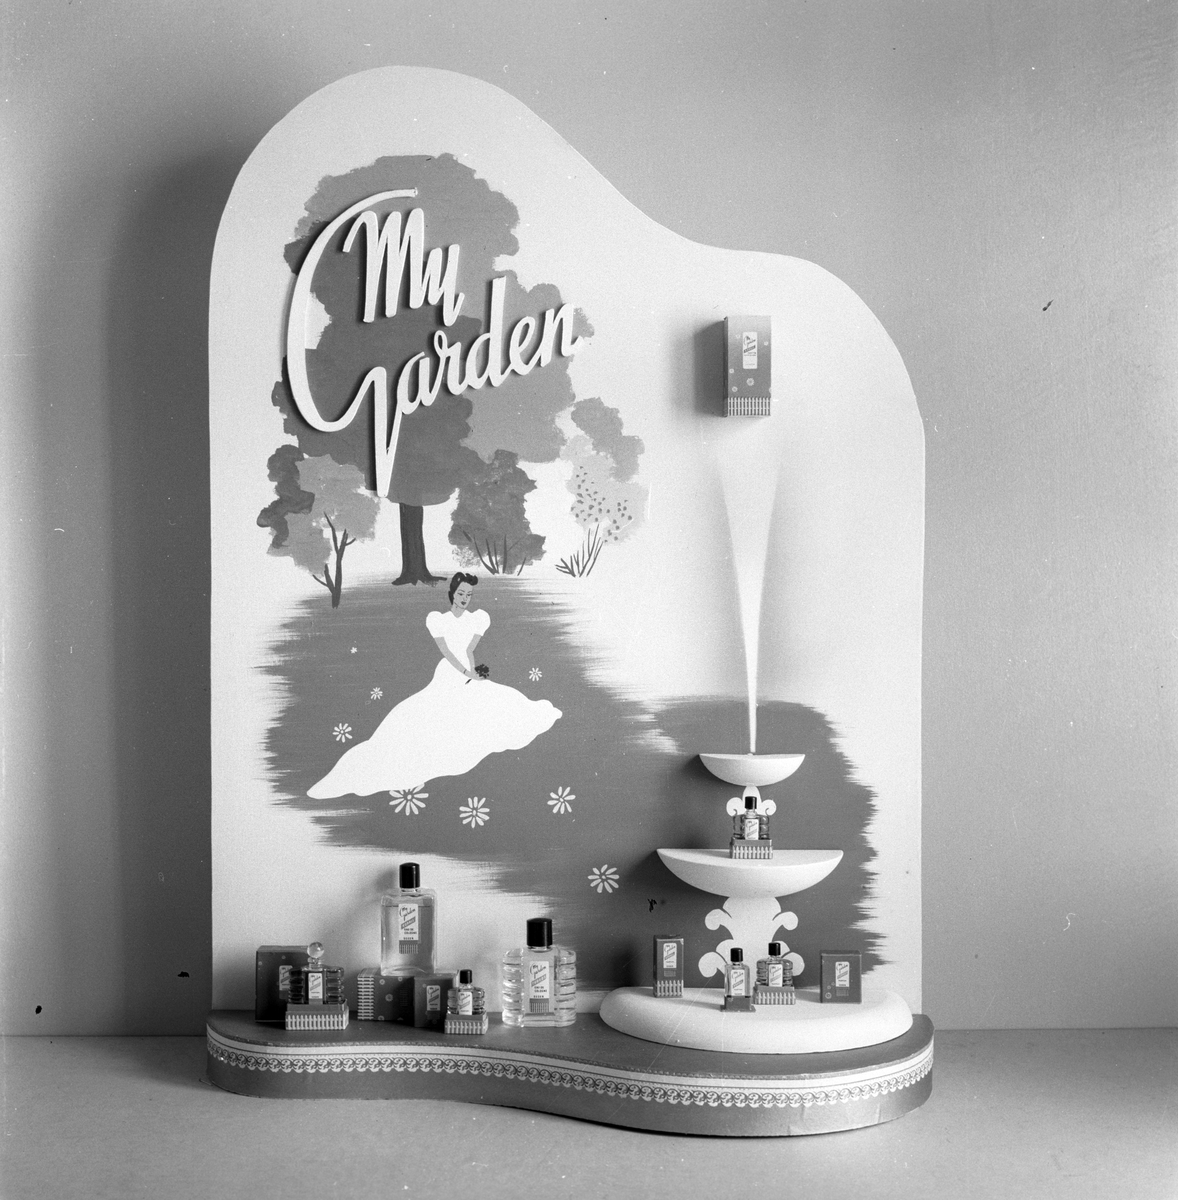 Konsum Alfa. "My Garden", parfymskylt. 1945.